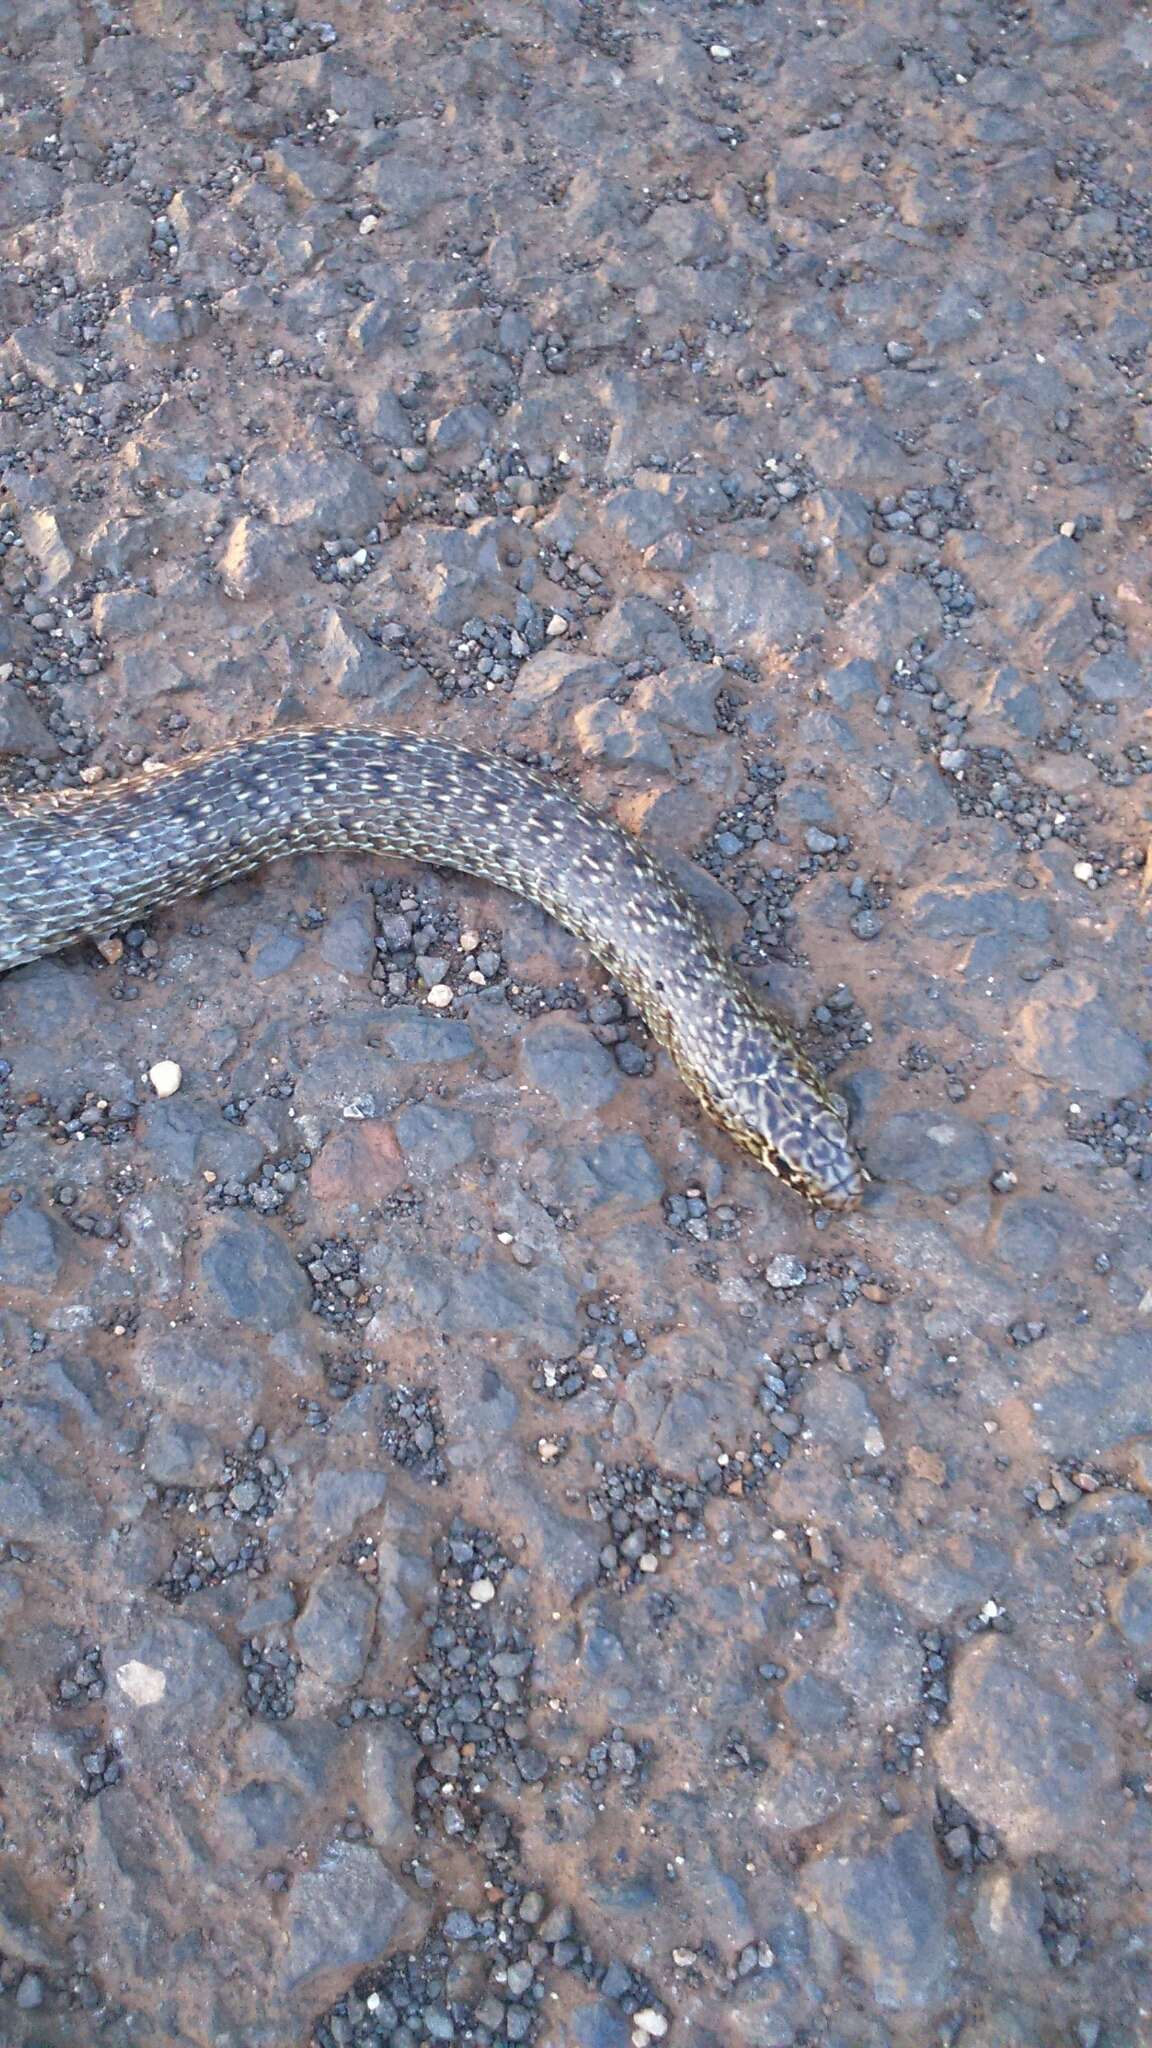 Image of Large Whip Snake